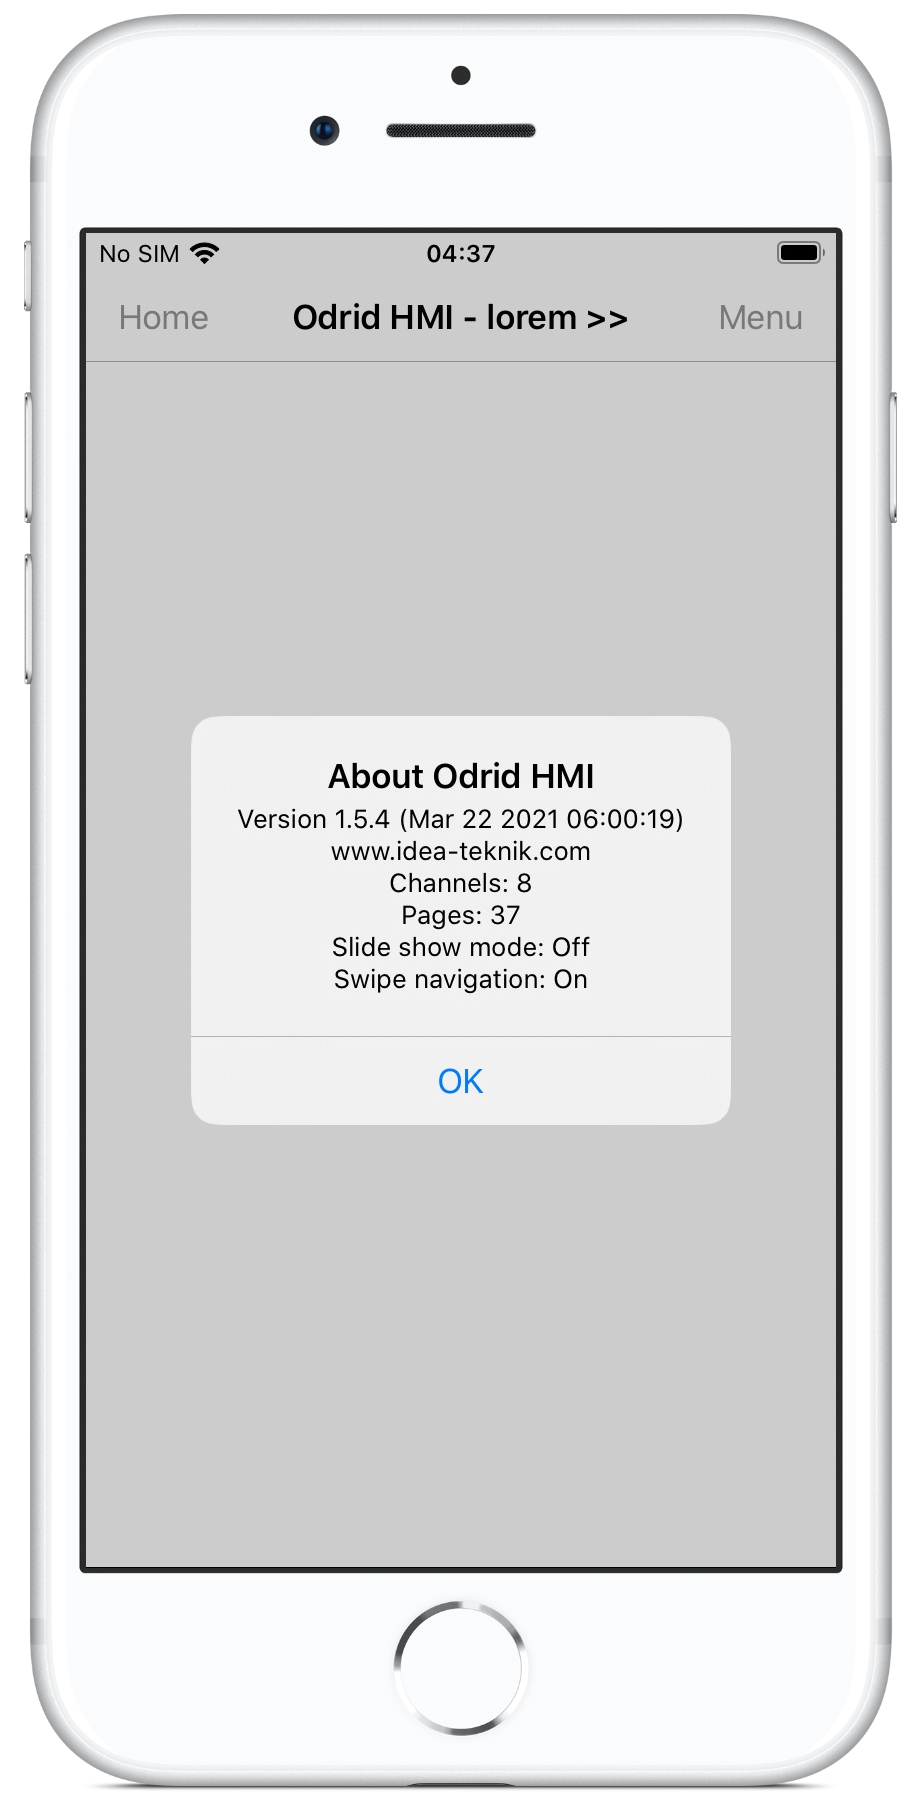 Odrid HMI 1.5.4 - About